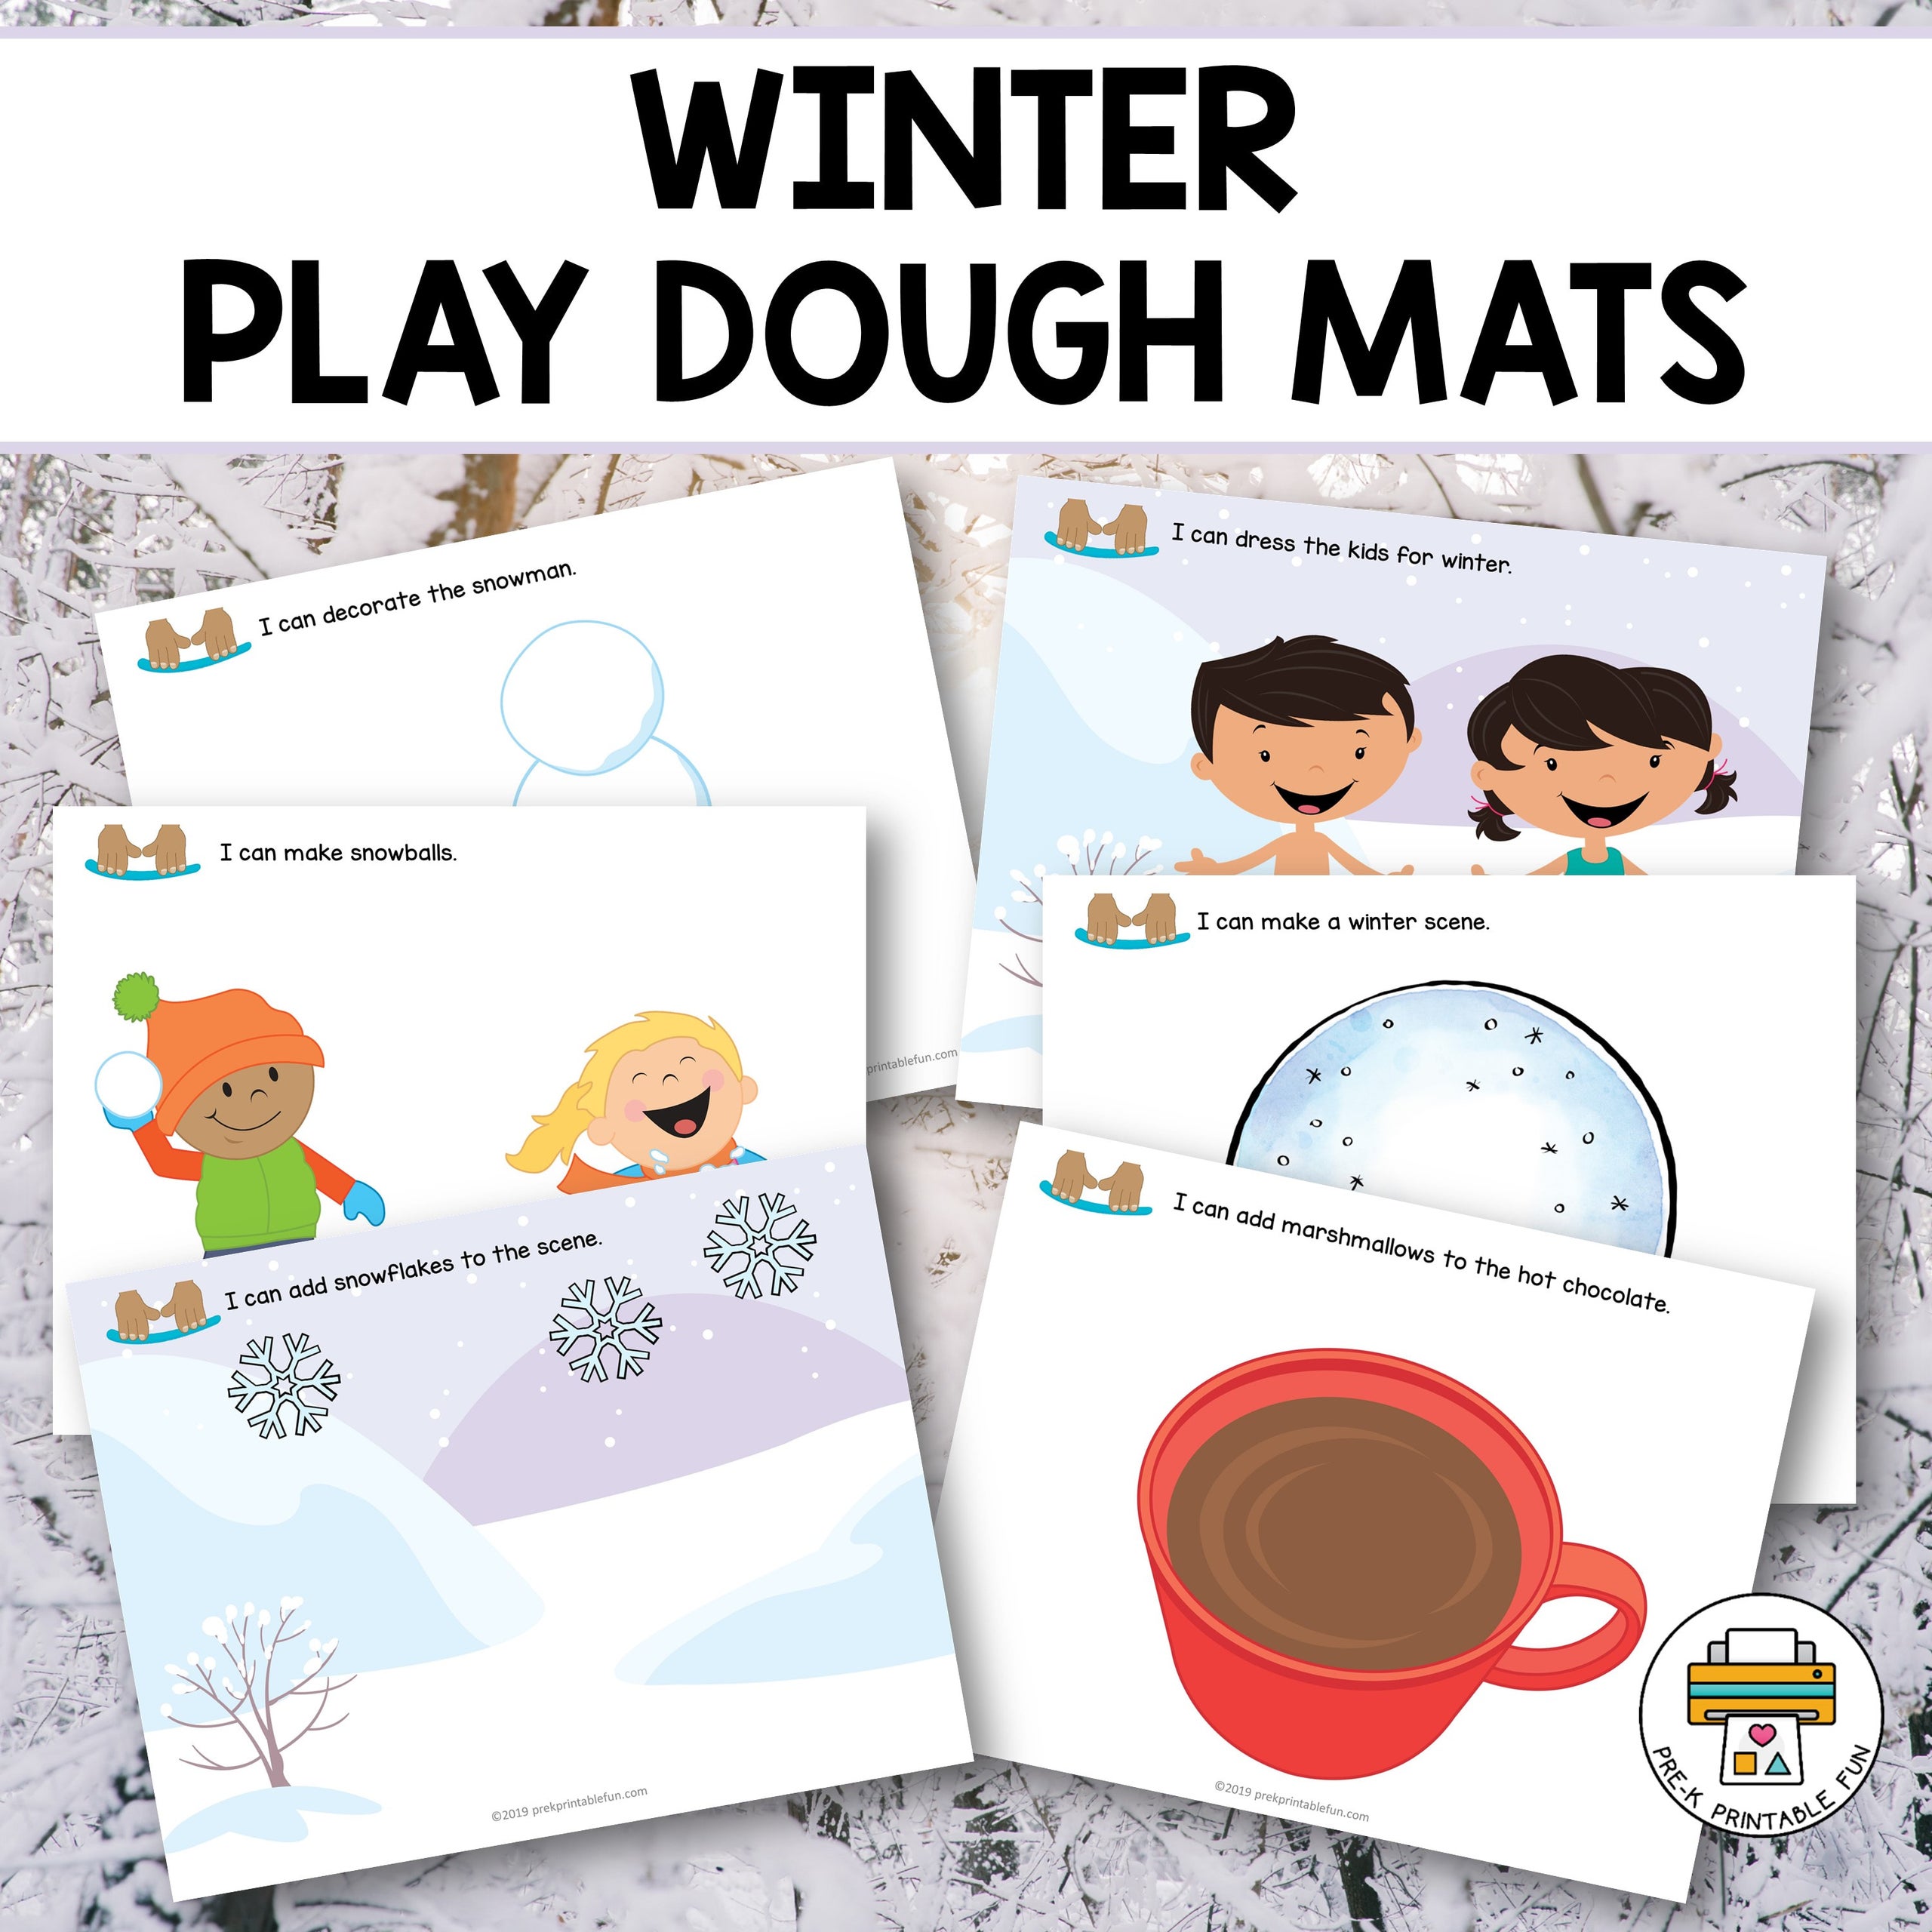 ❄️️ FREE Printable Winter Playdough Mats Activity for Preschool